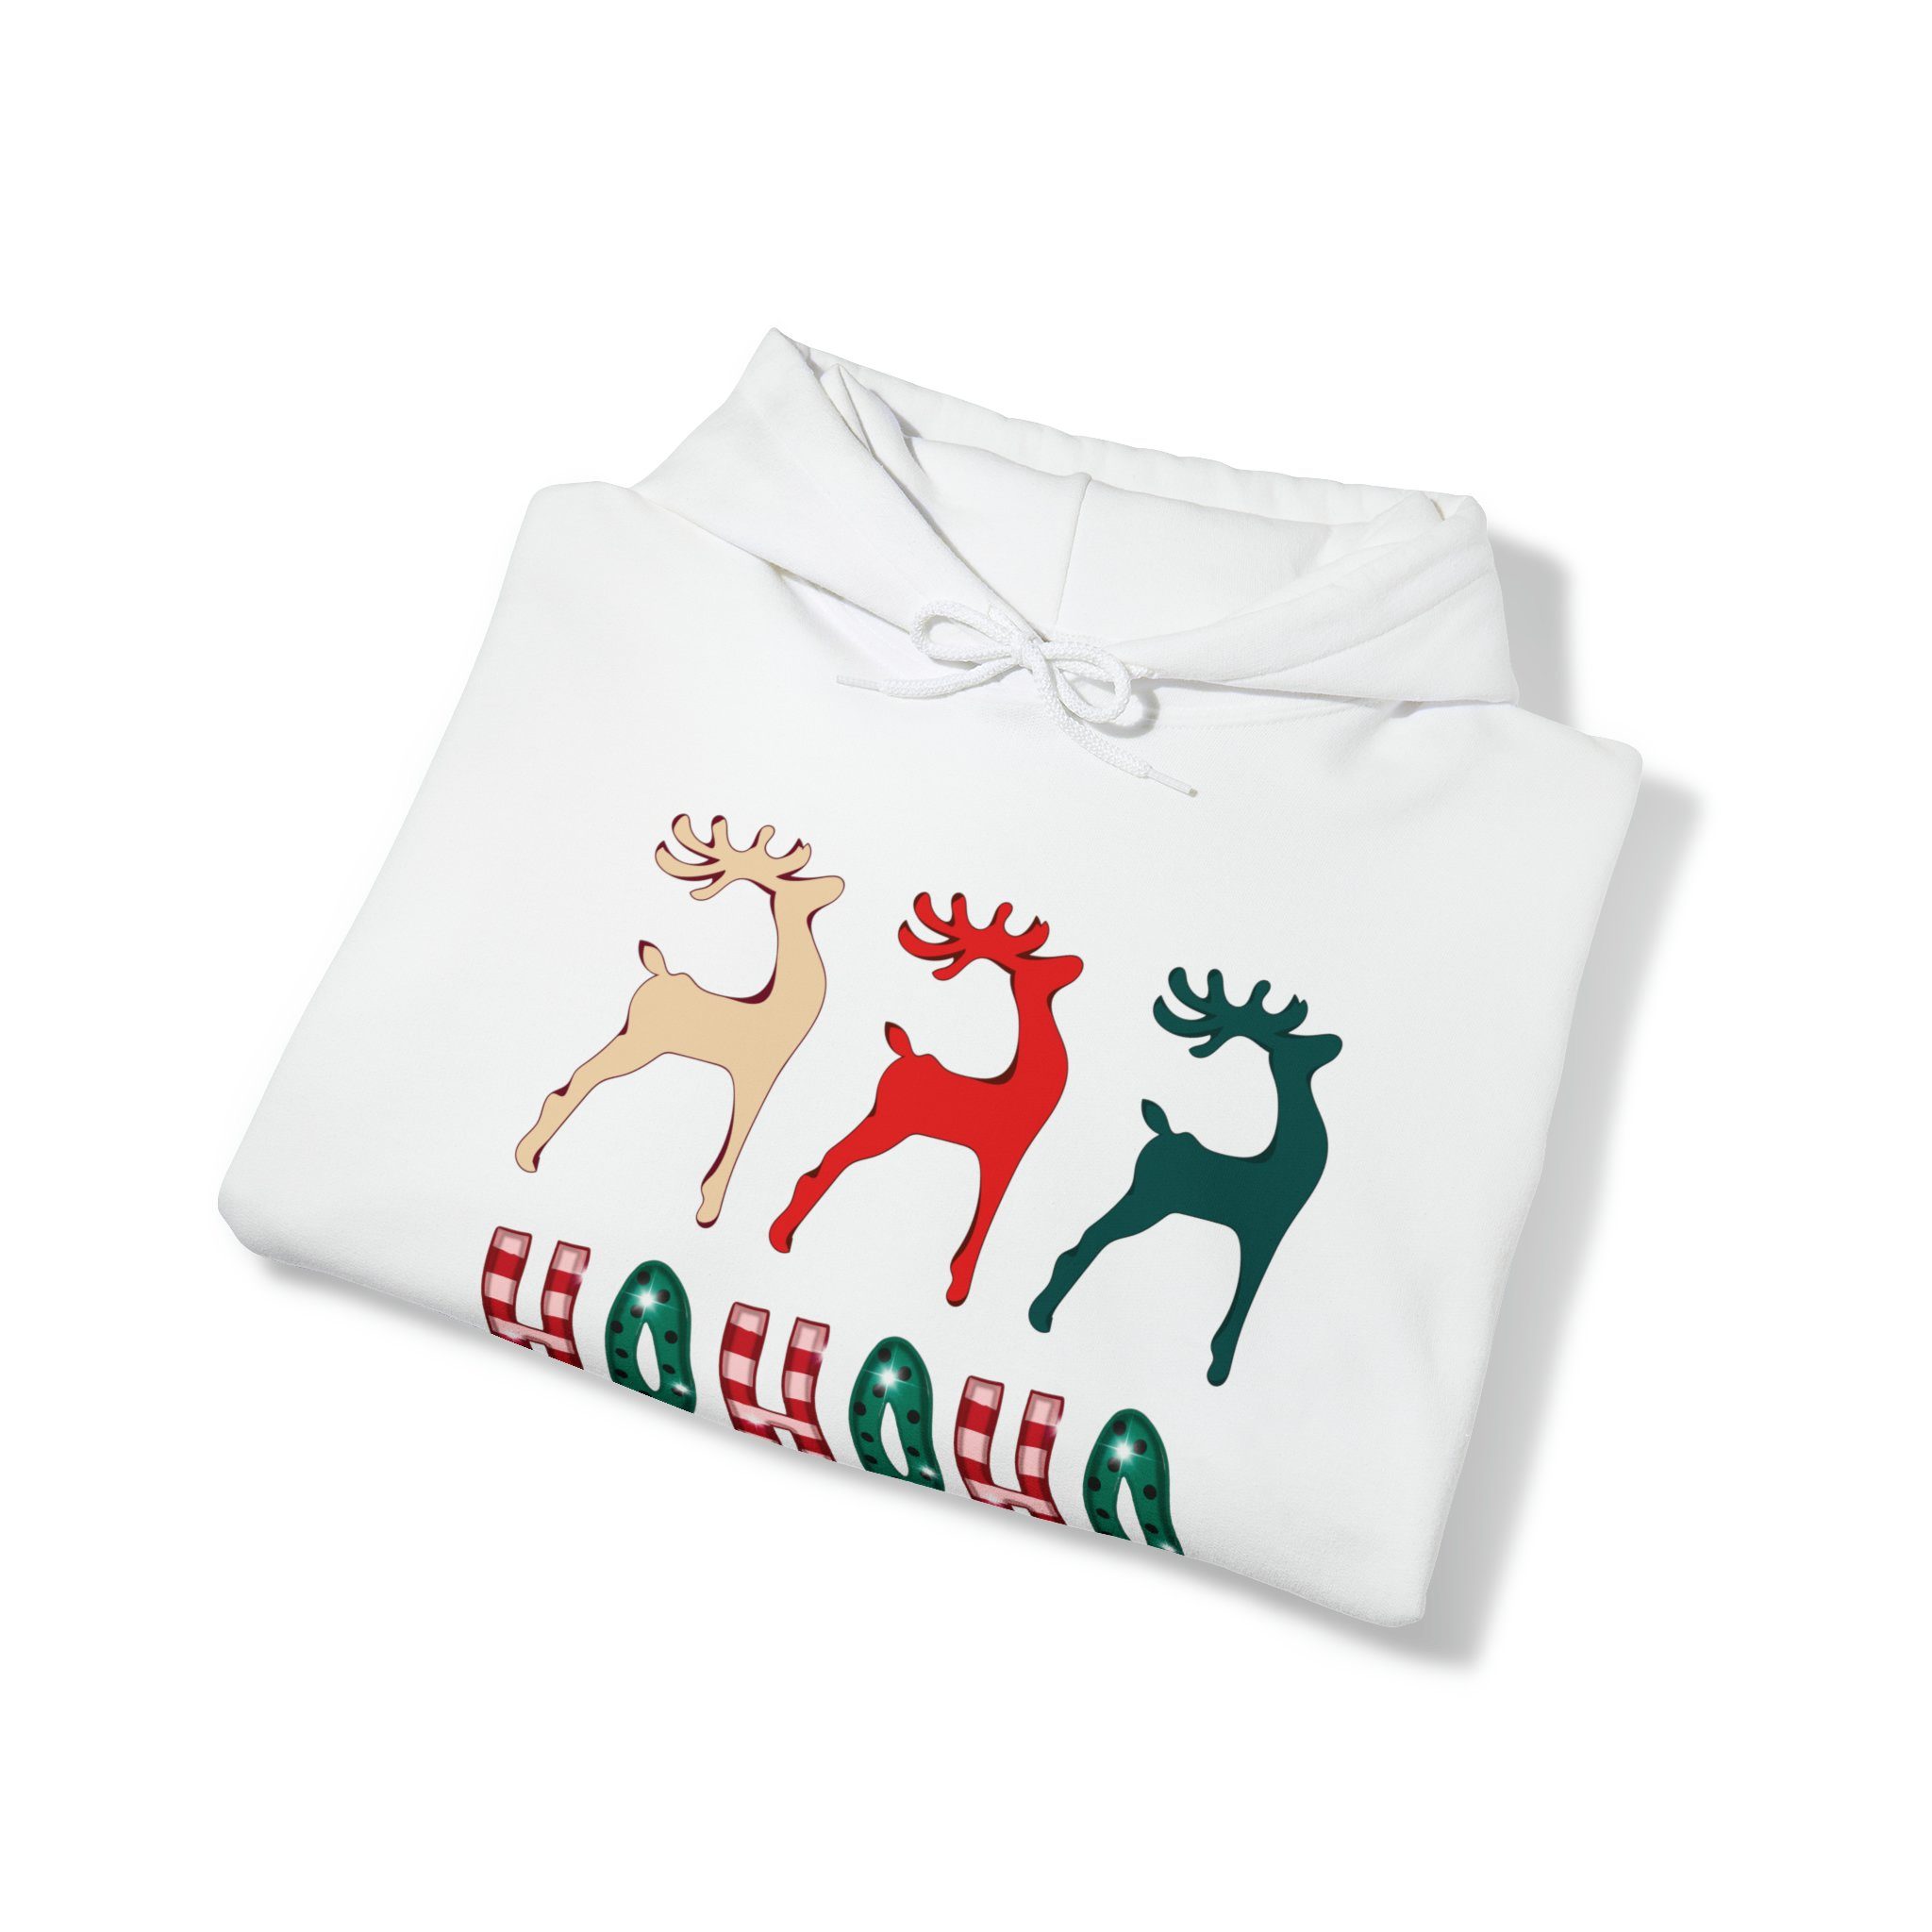 Christmas Quality Elegance Women Hoodie, Sweatshirt Weihnachtssweatshirt White Men Christmas Reindeer